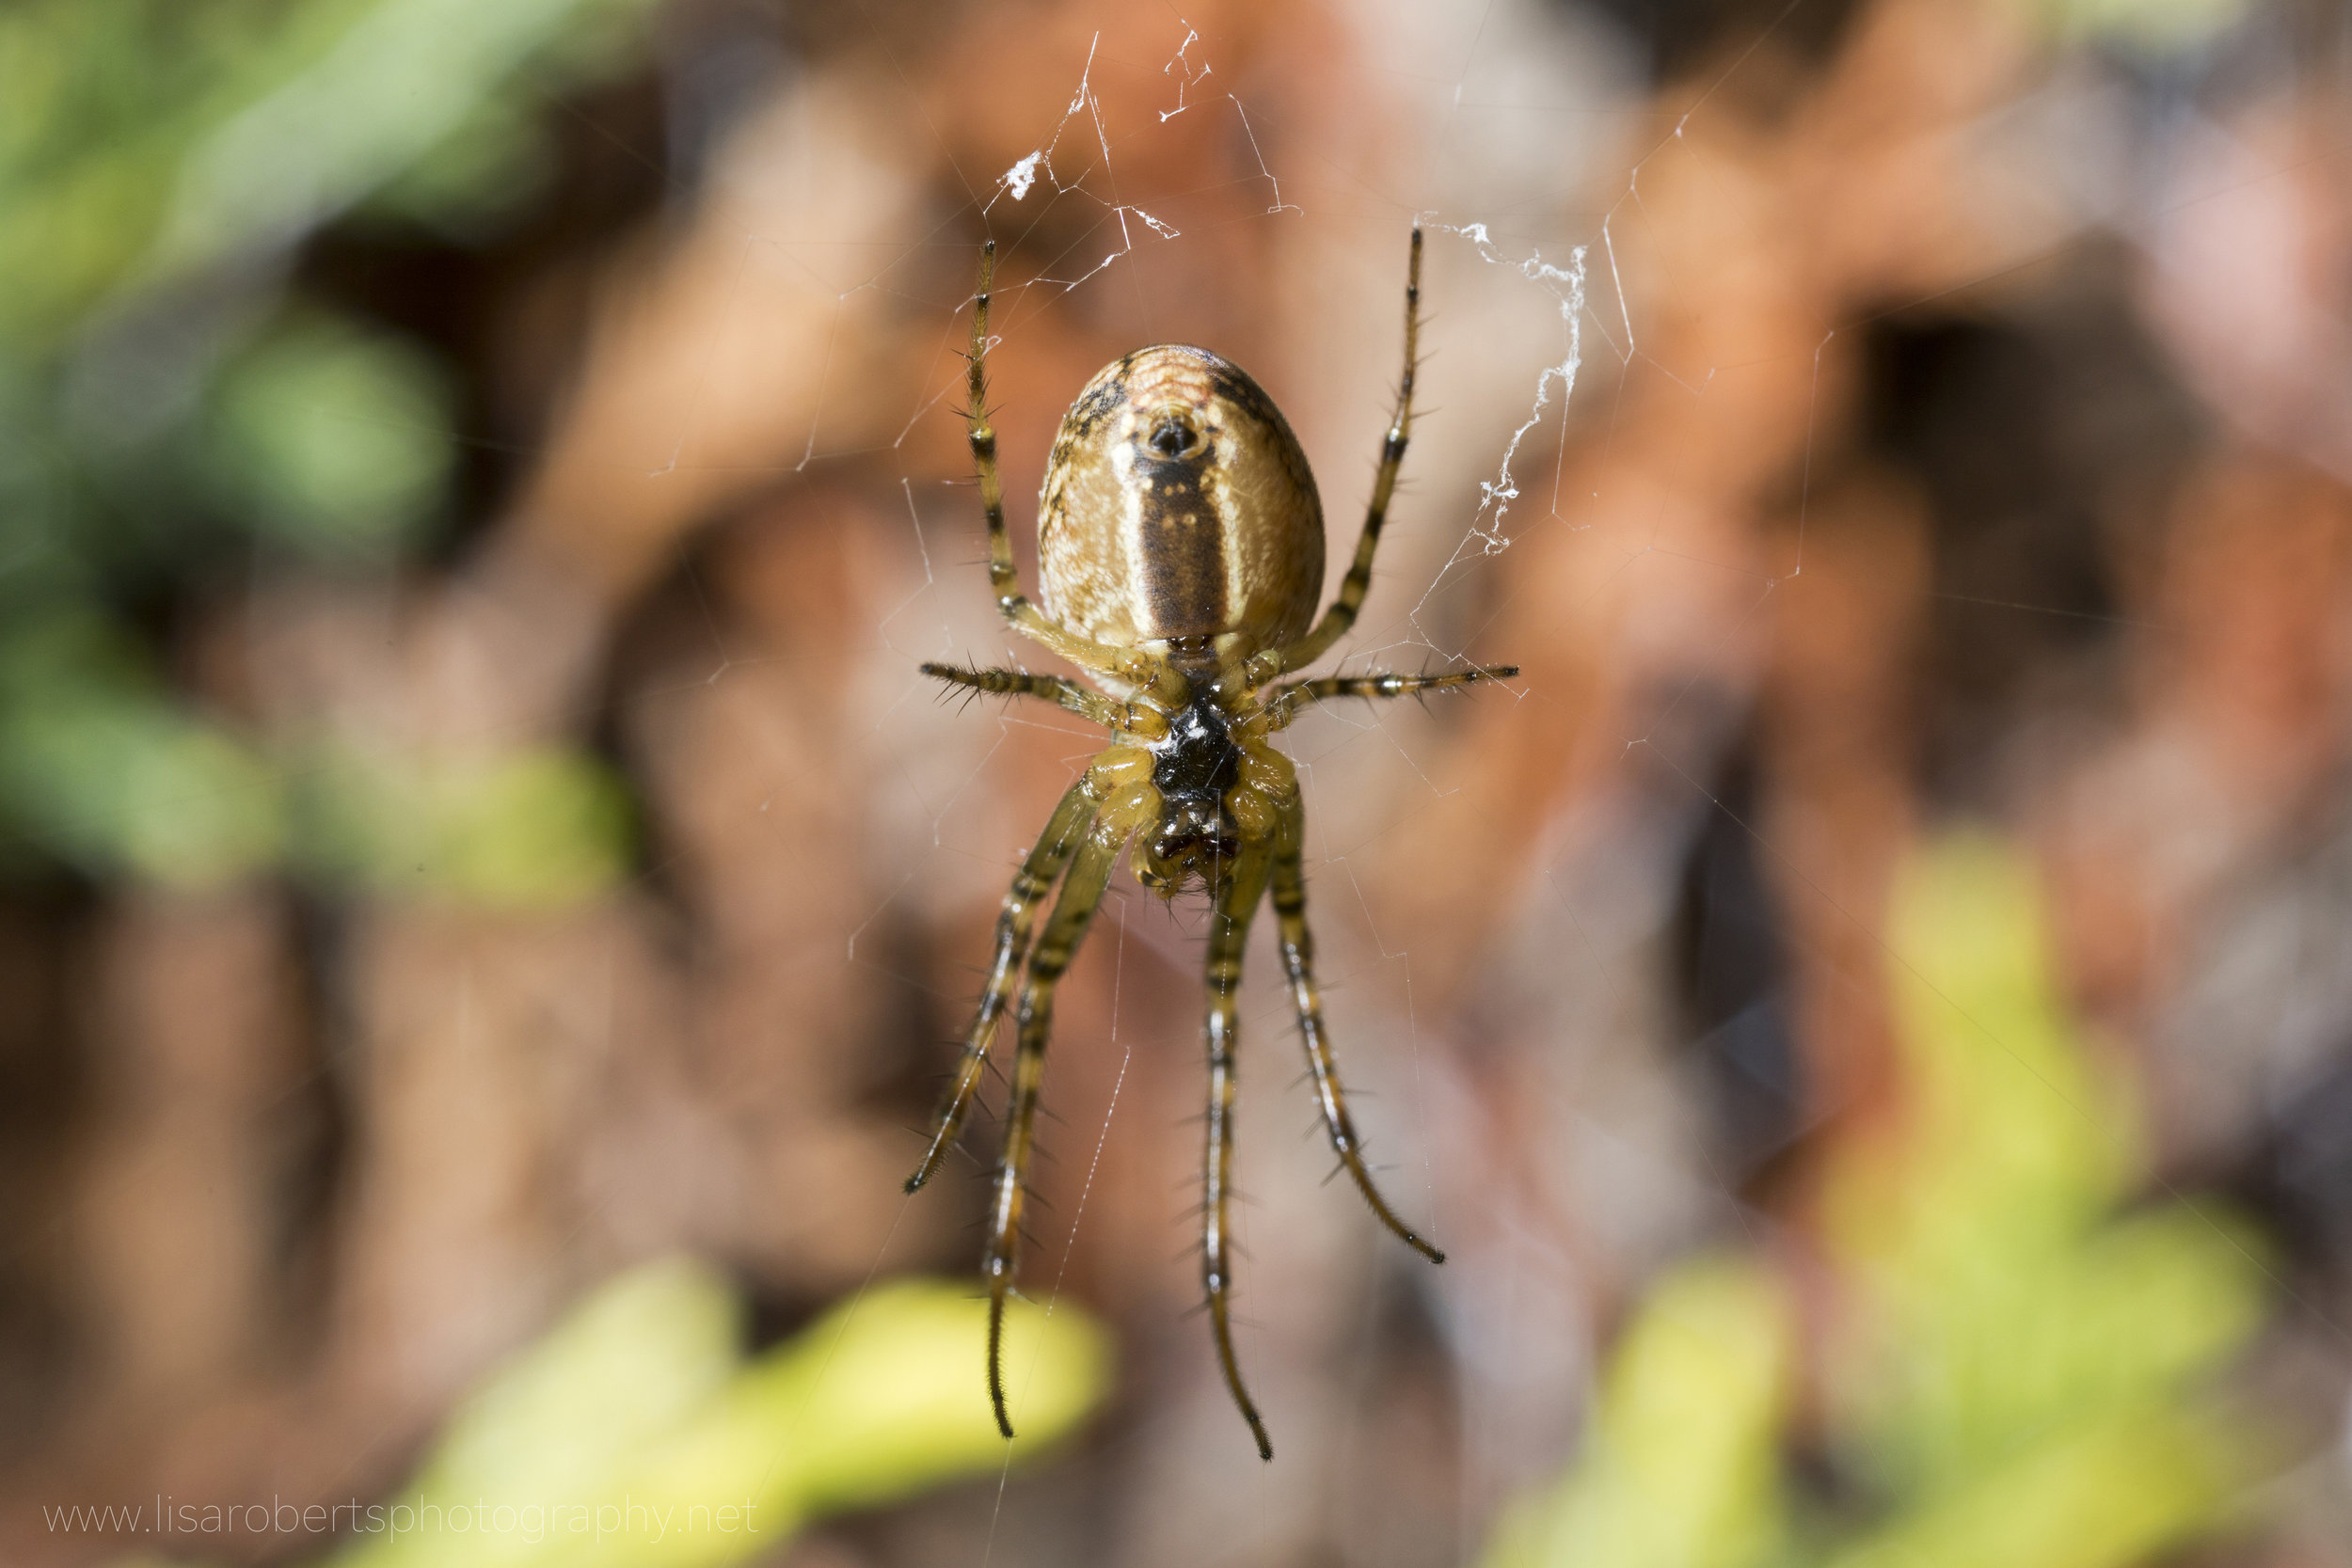  Common Orb Weaver Spider on web 